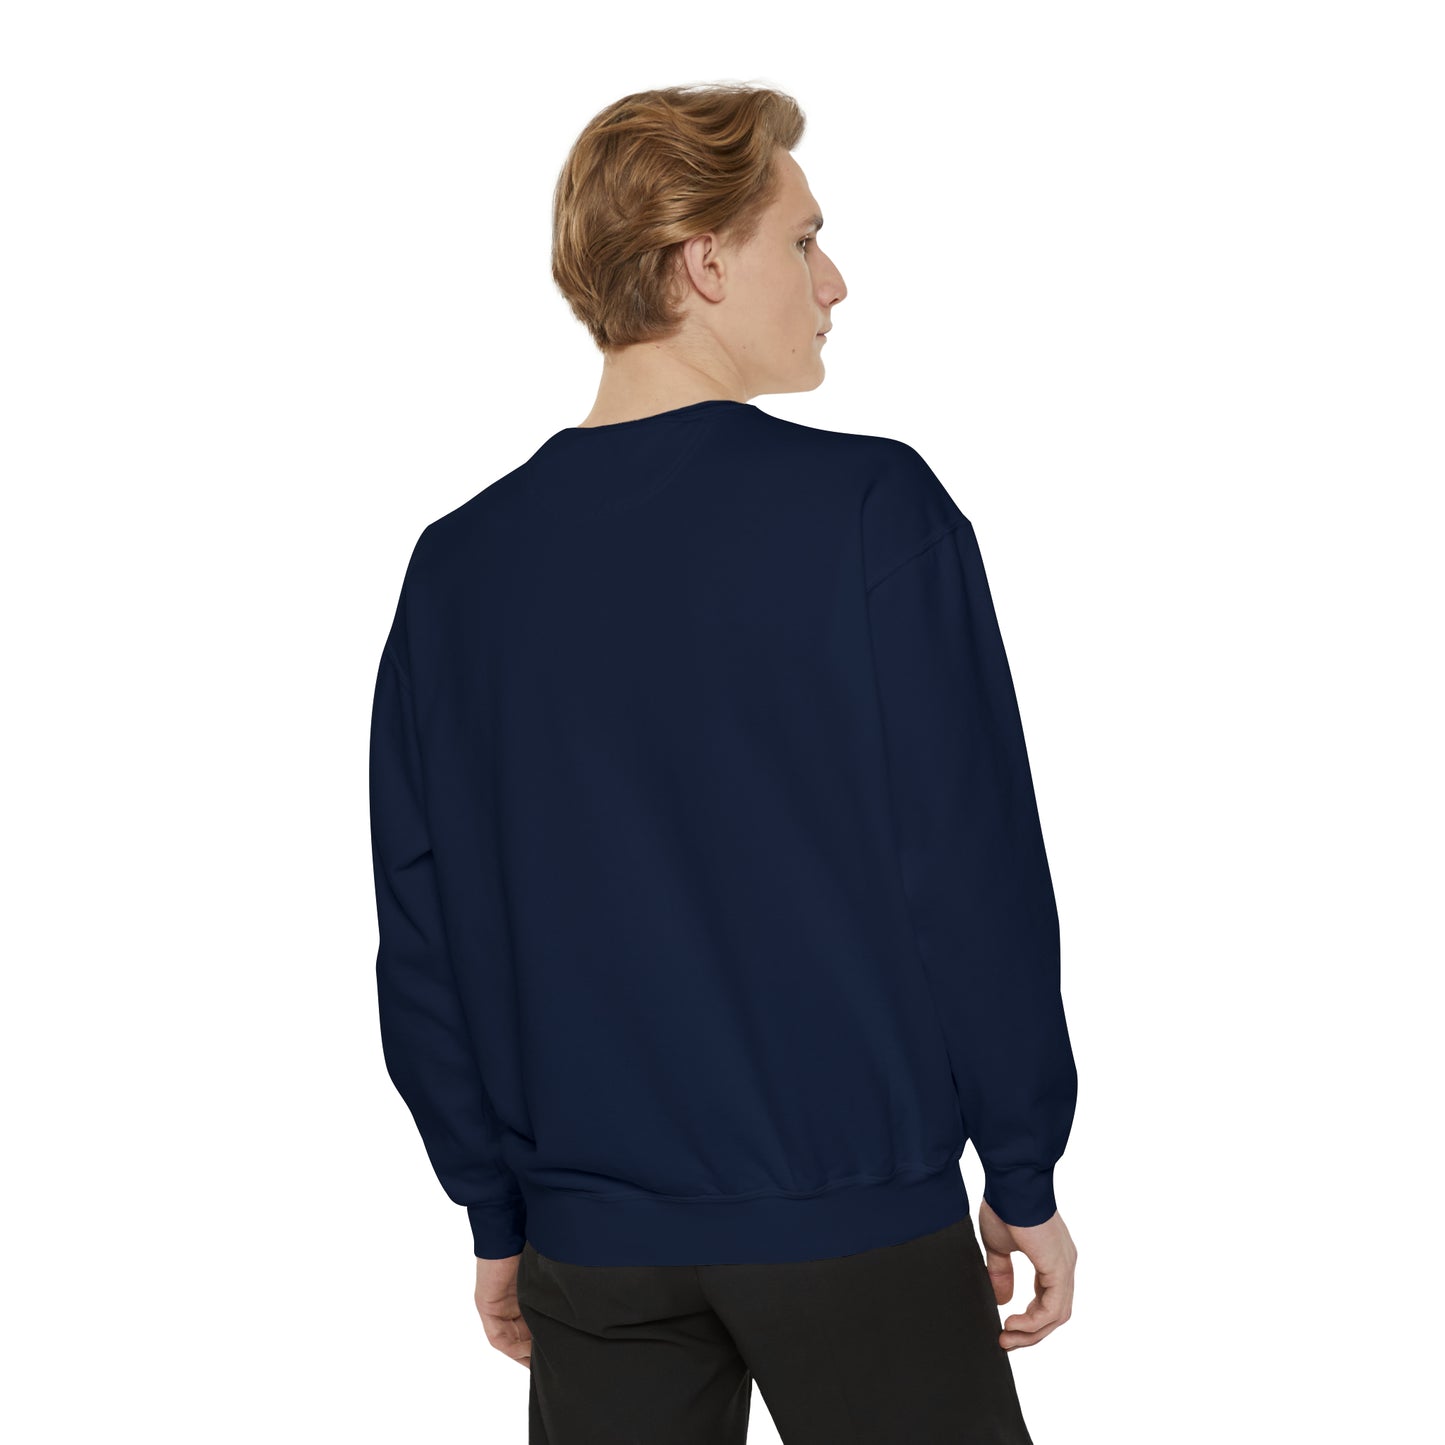 Snowman - Unisex Garment-Dyed Sweatshirt